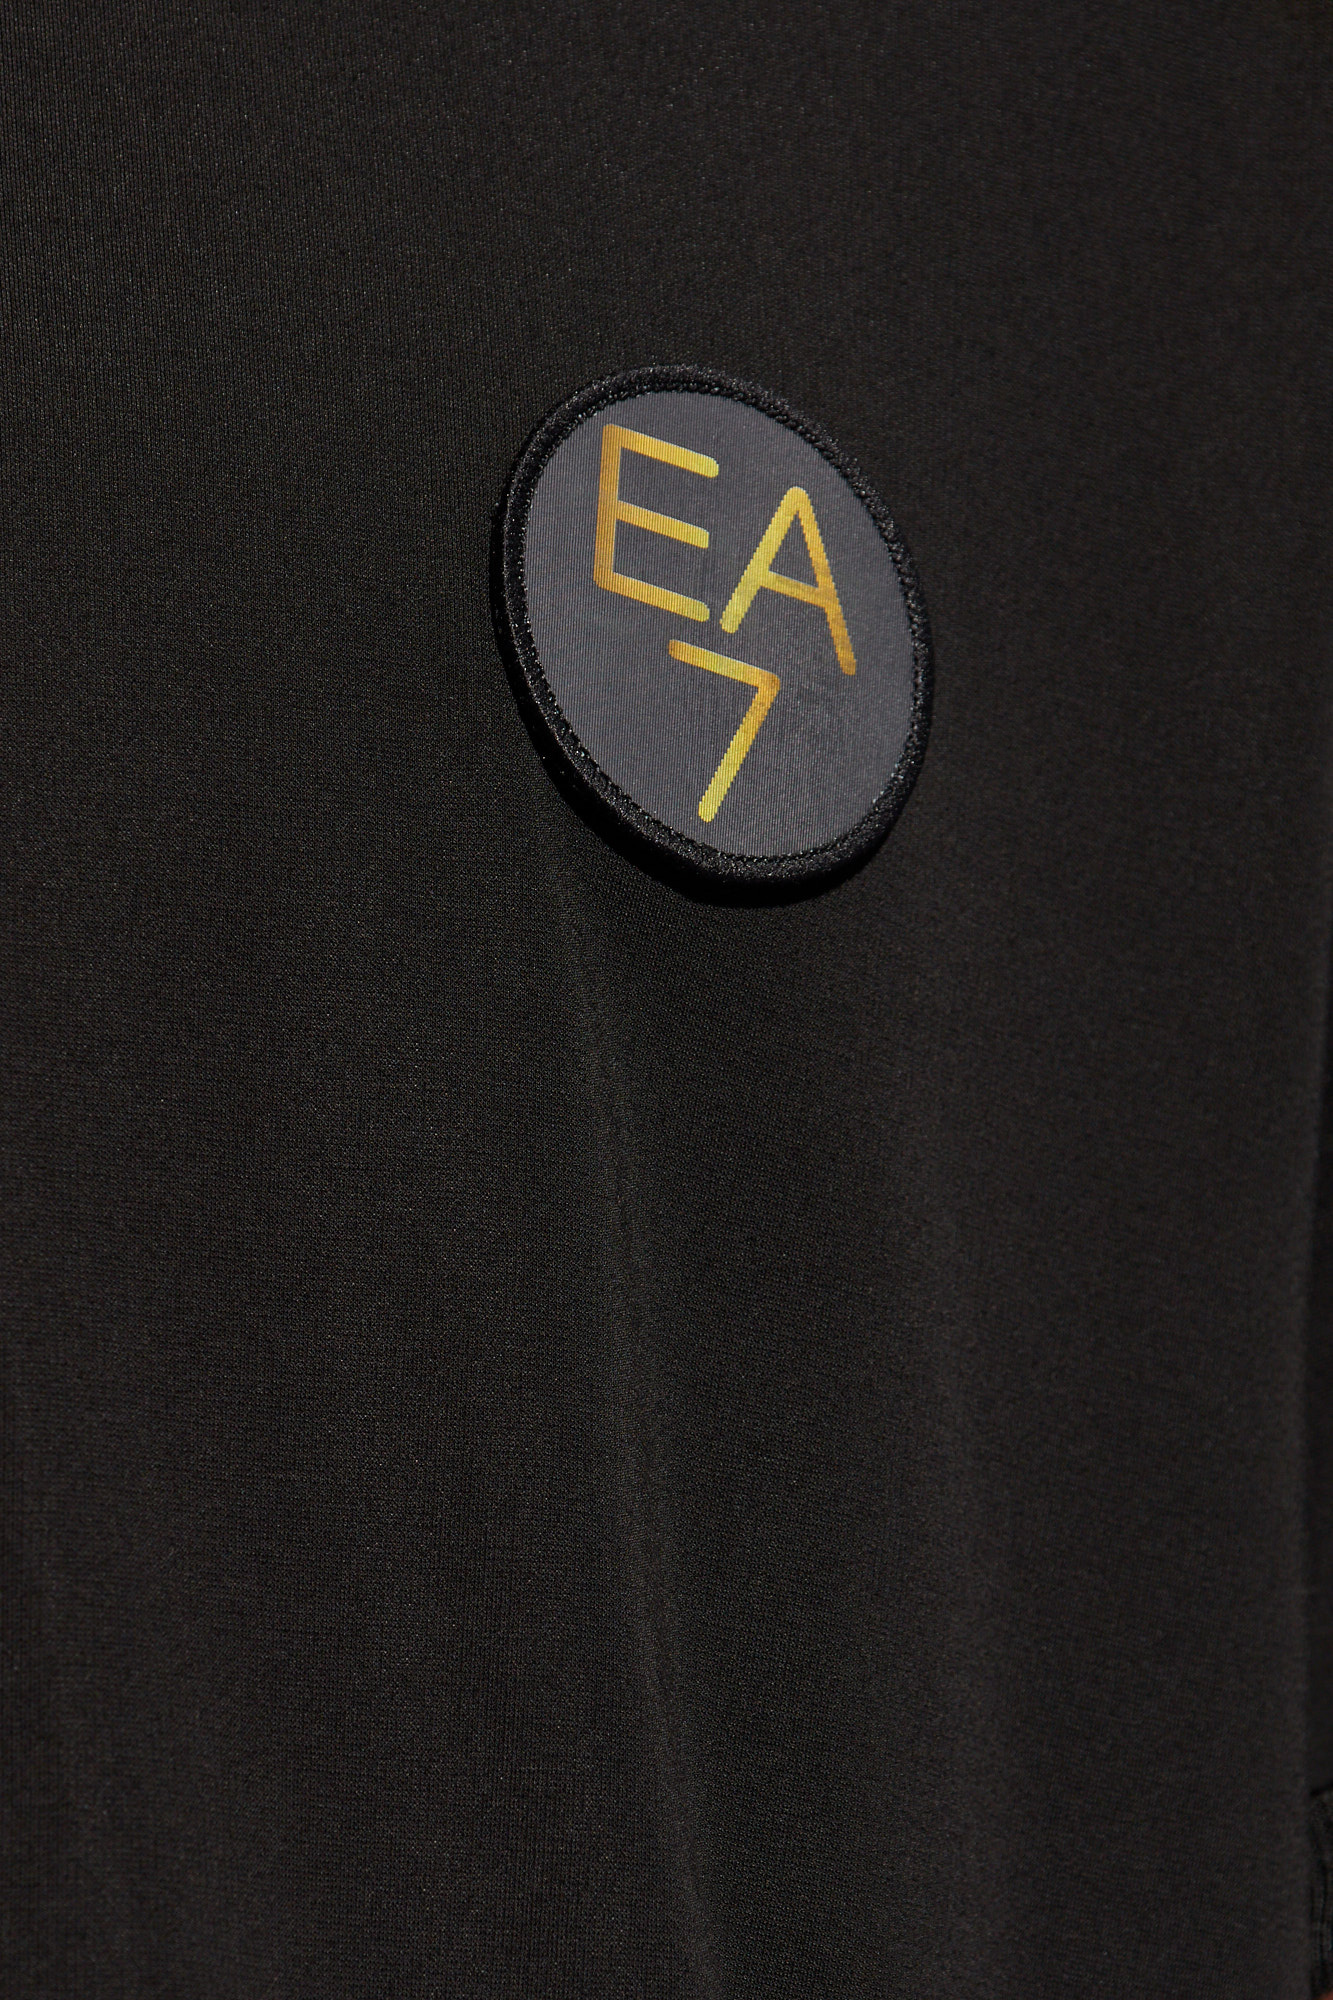 EA7 Emporio Armani Logo Series Printed T-Shirt - Black/Gold